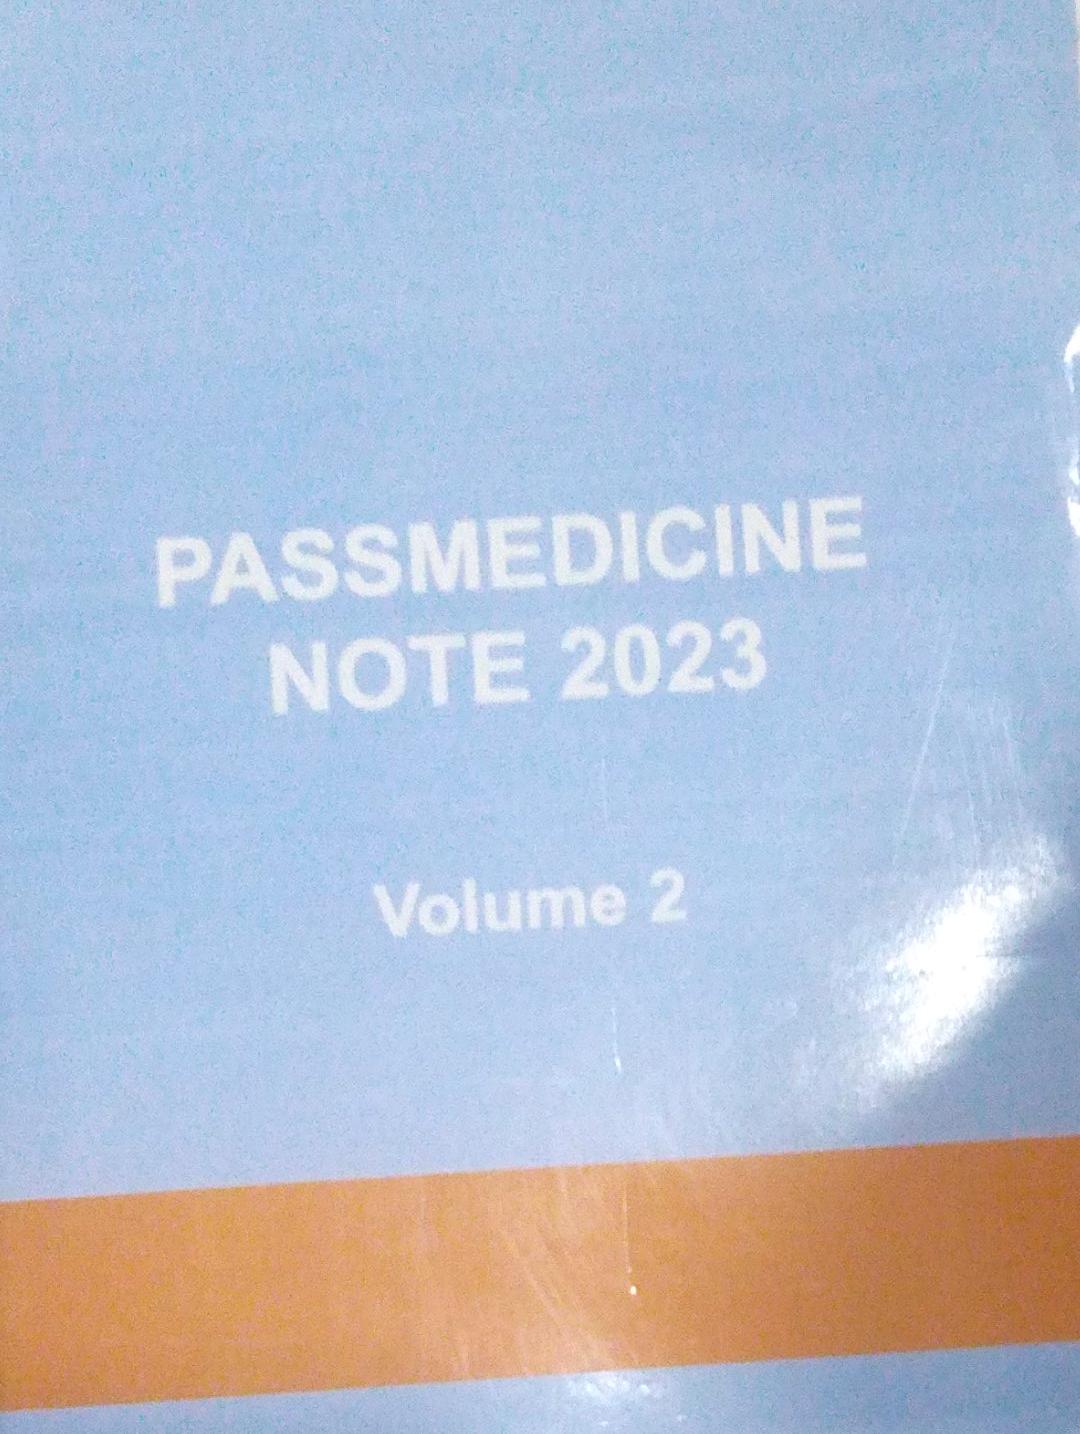 passmedicine notes 2023